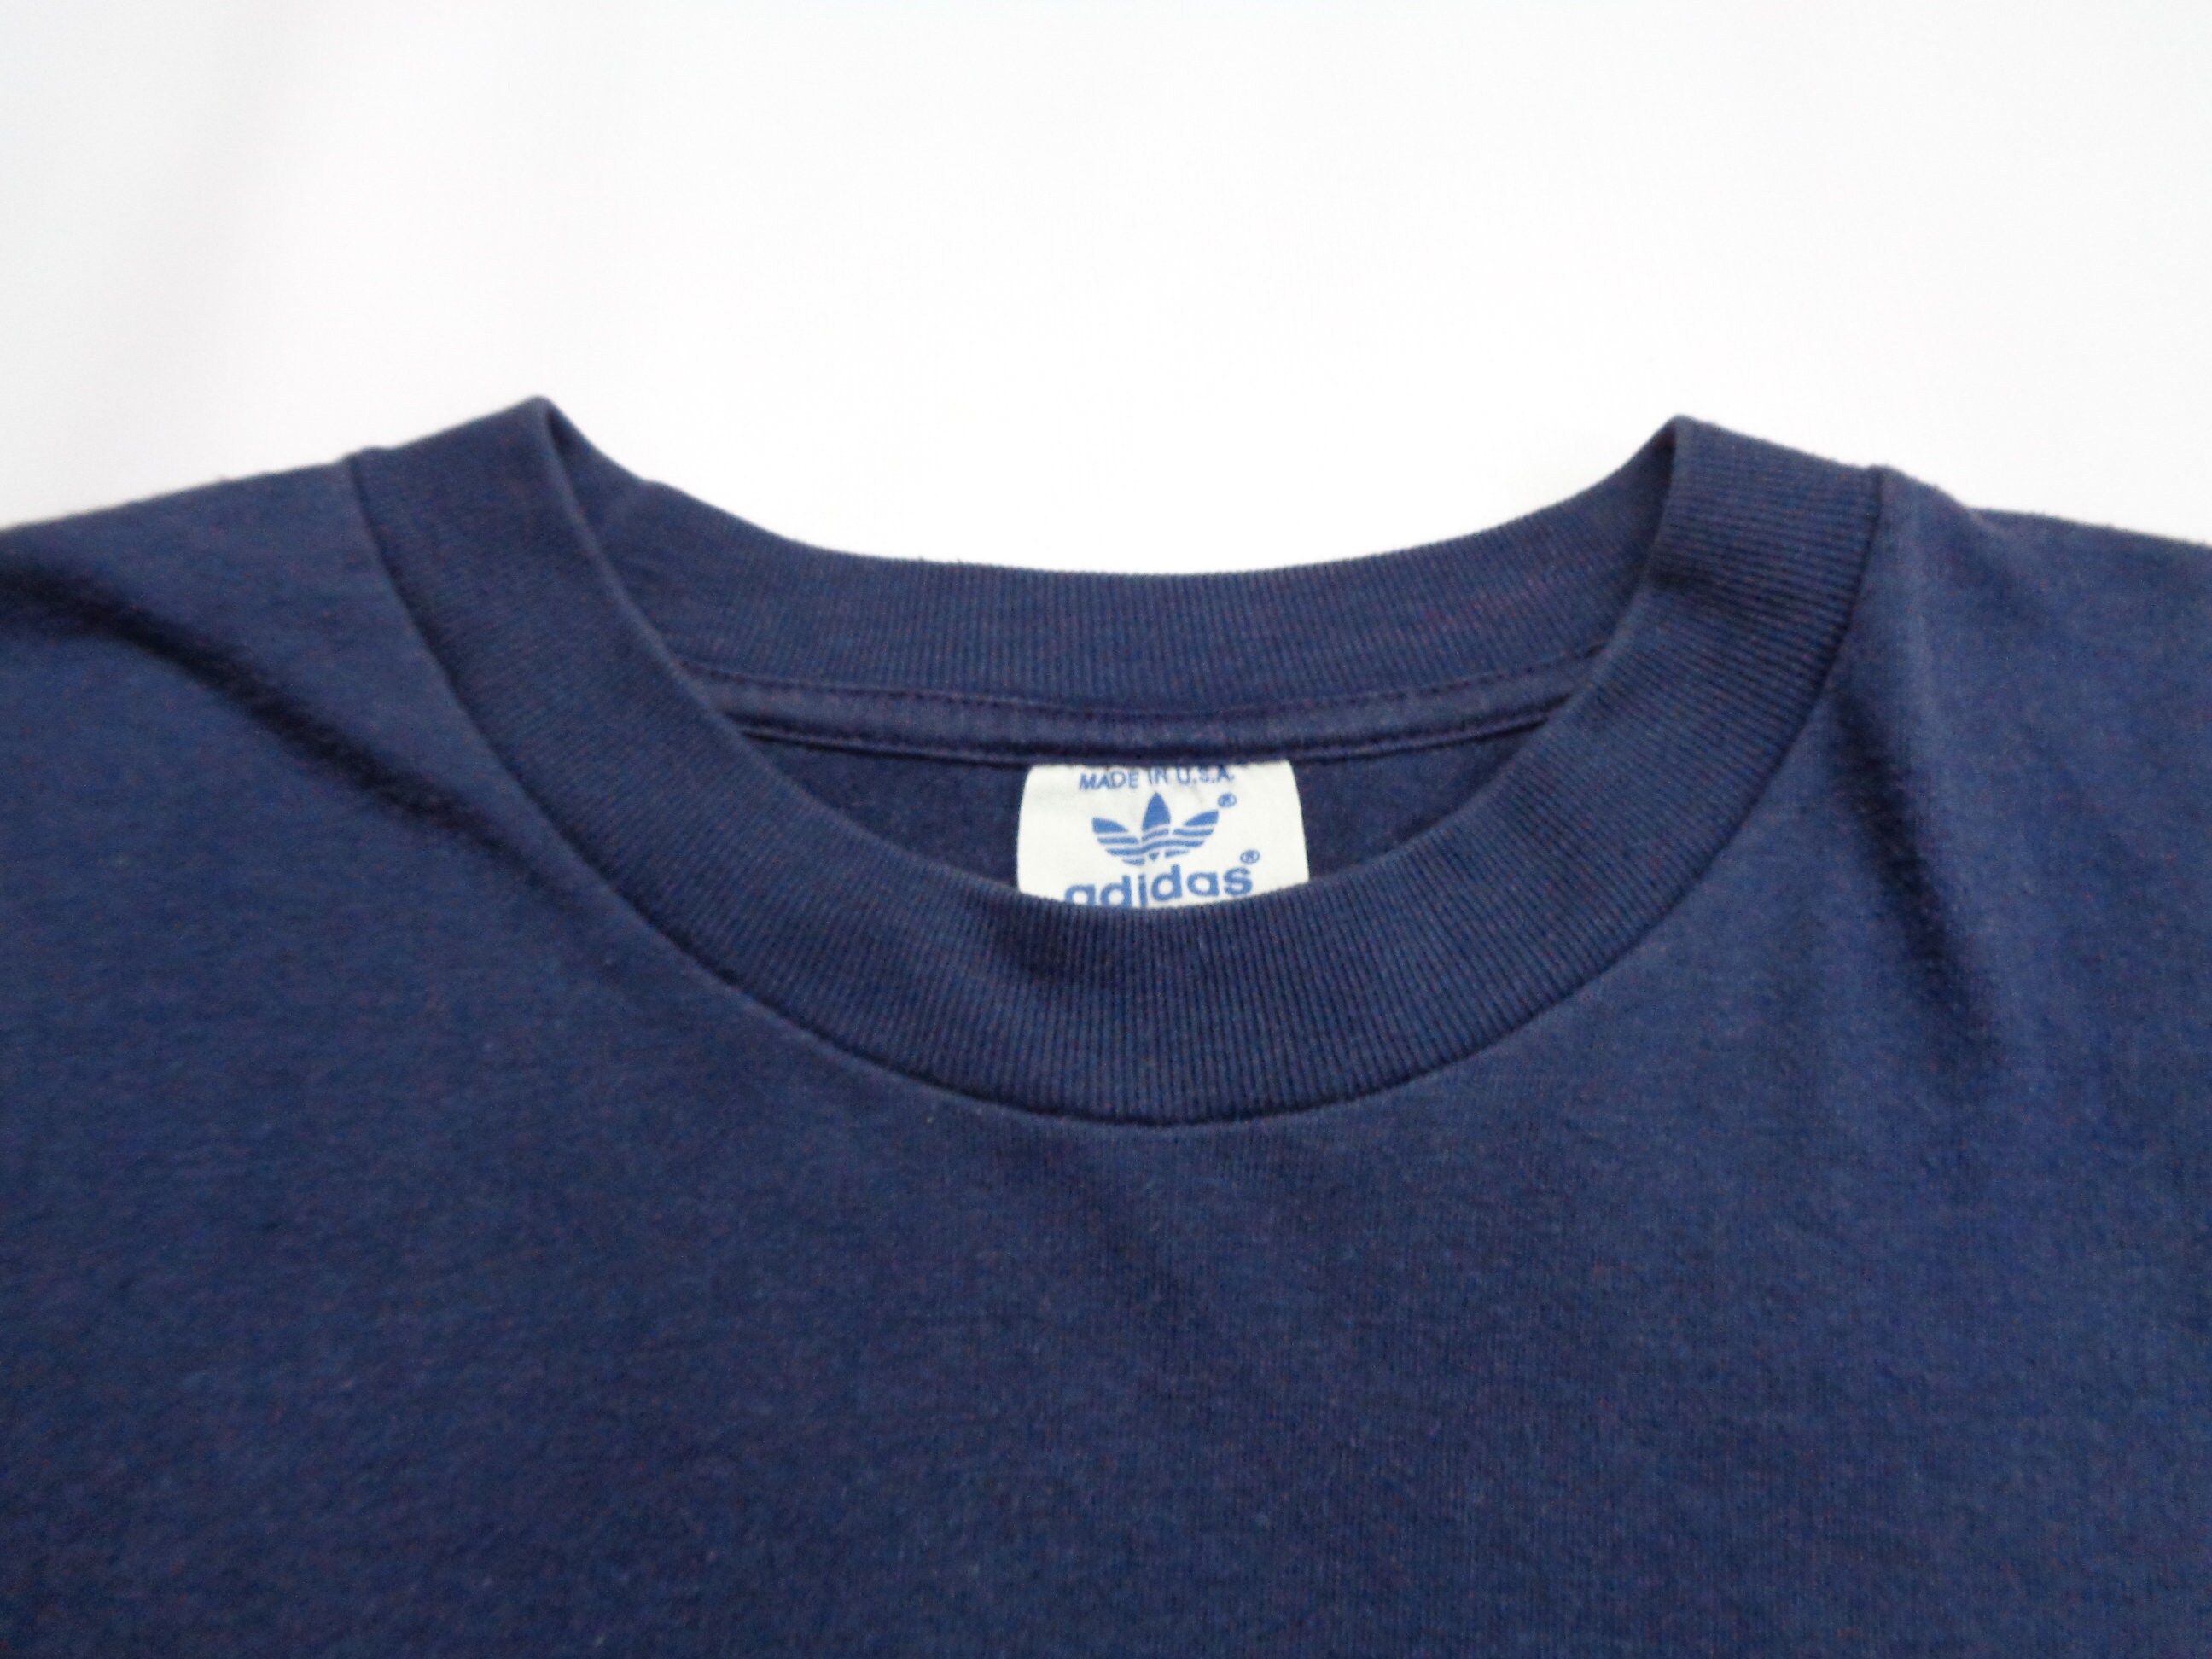 Adidas Shirt Vintage 80s Adidas Trefoil Emblem Logo Shirt | Etsy